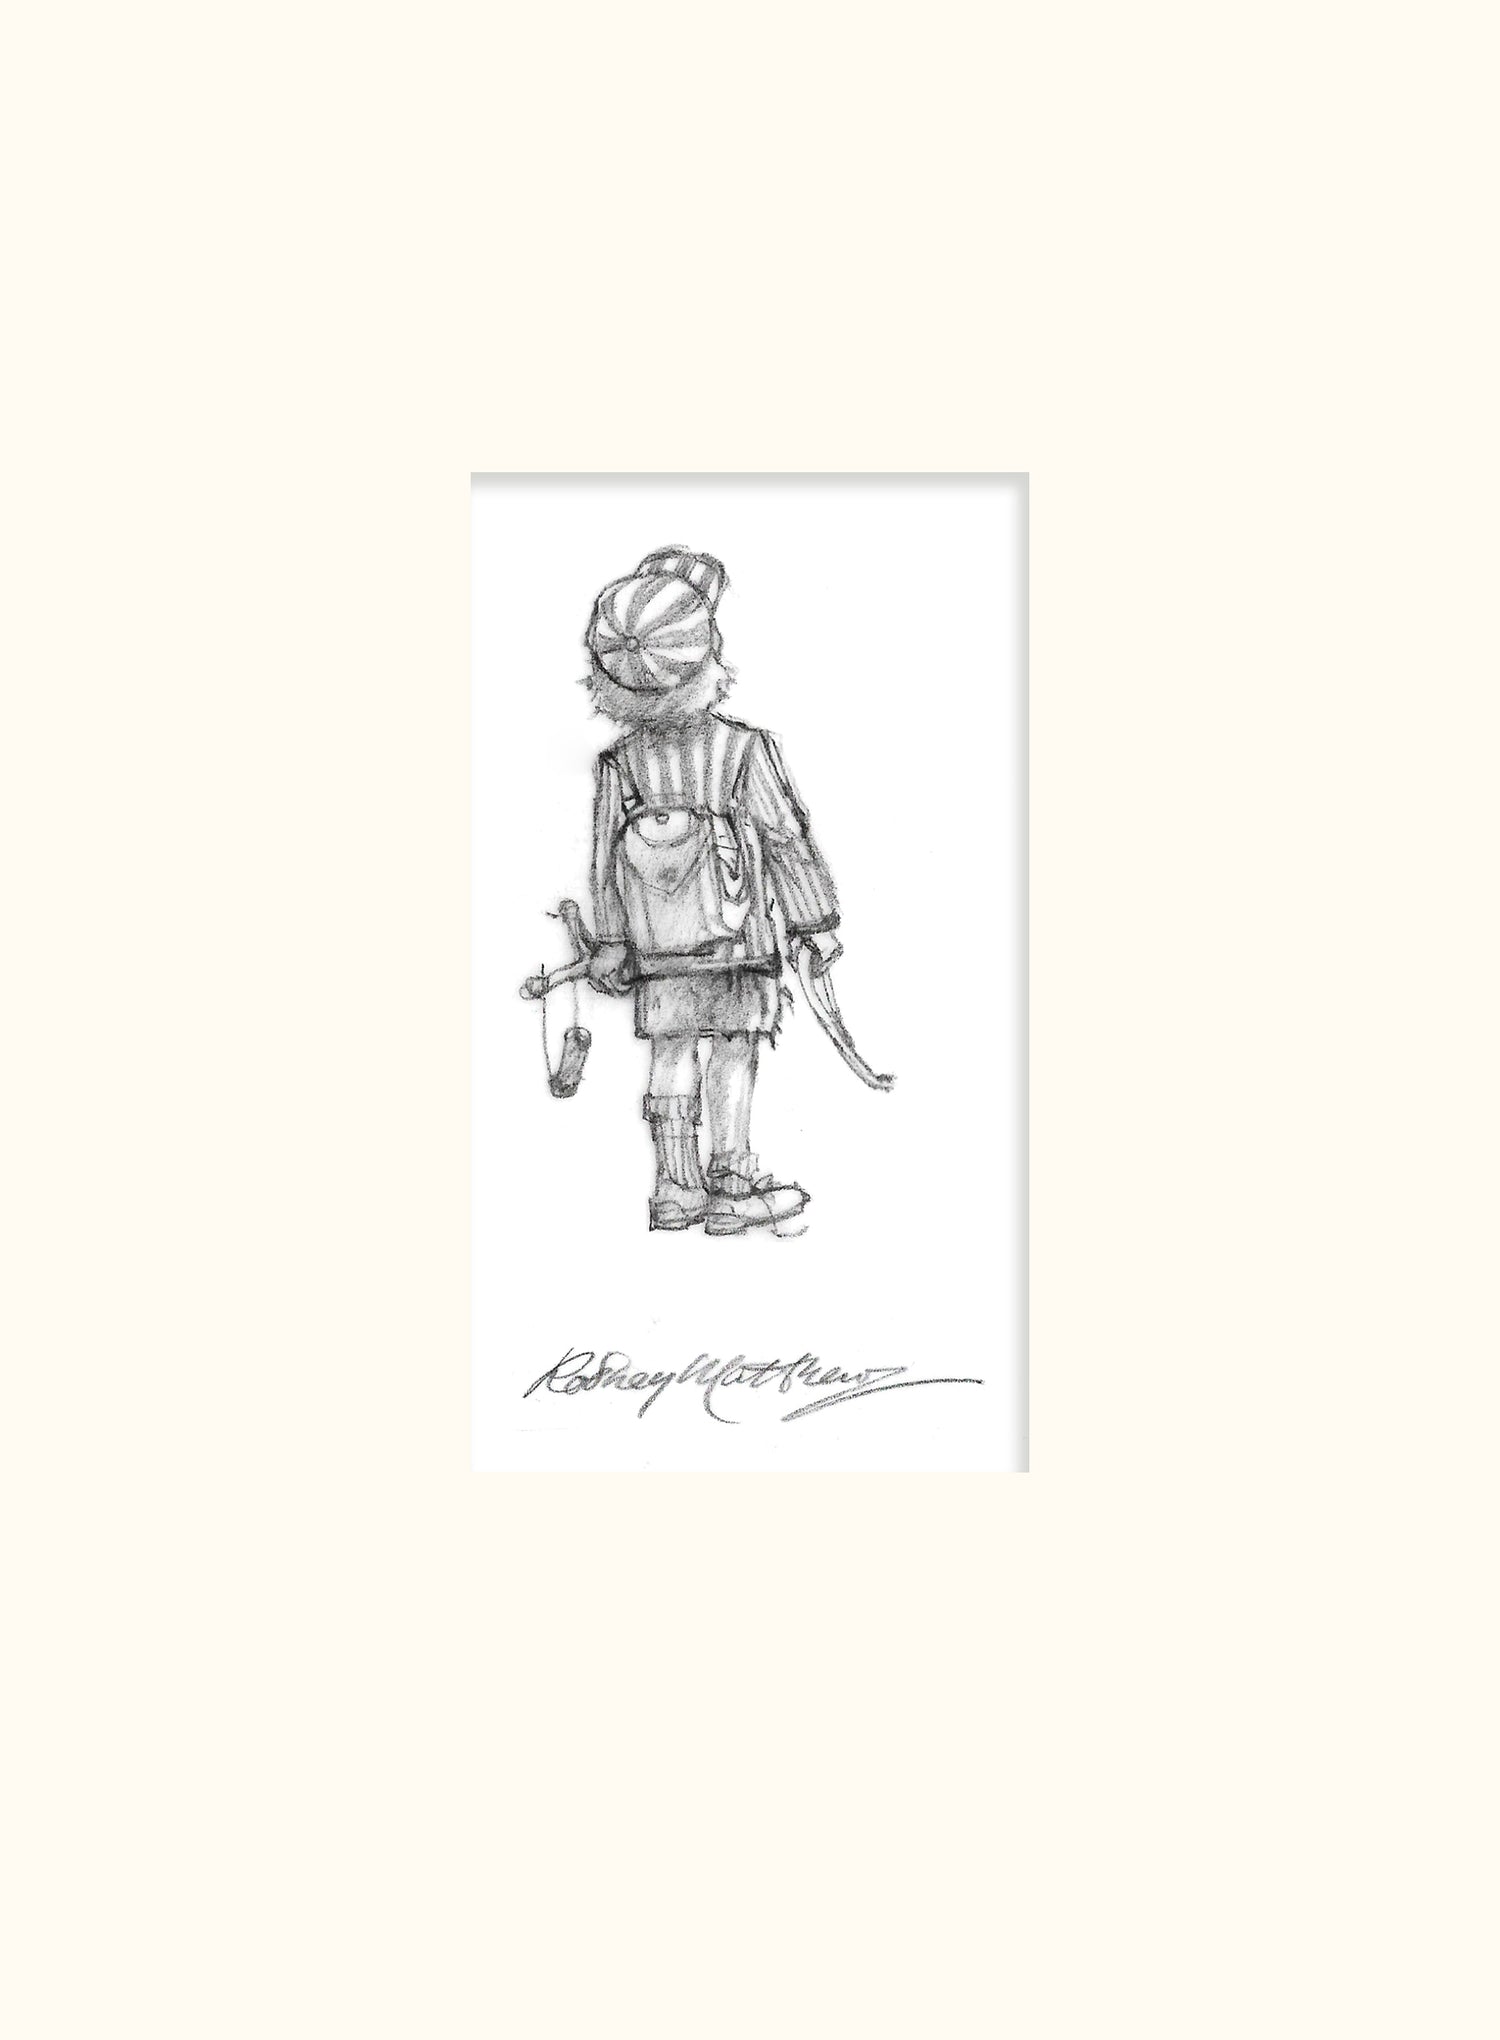 Detail from SB'D'L (Magnum) - Small boy original pencil sketch by Rodney Matthews